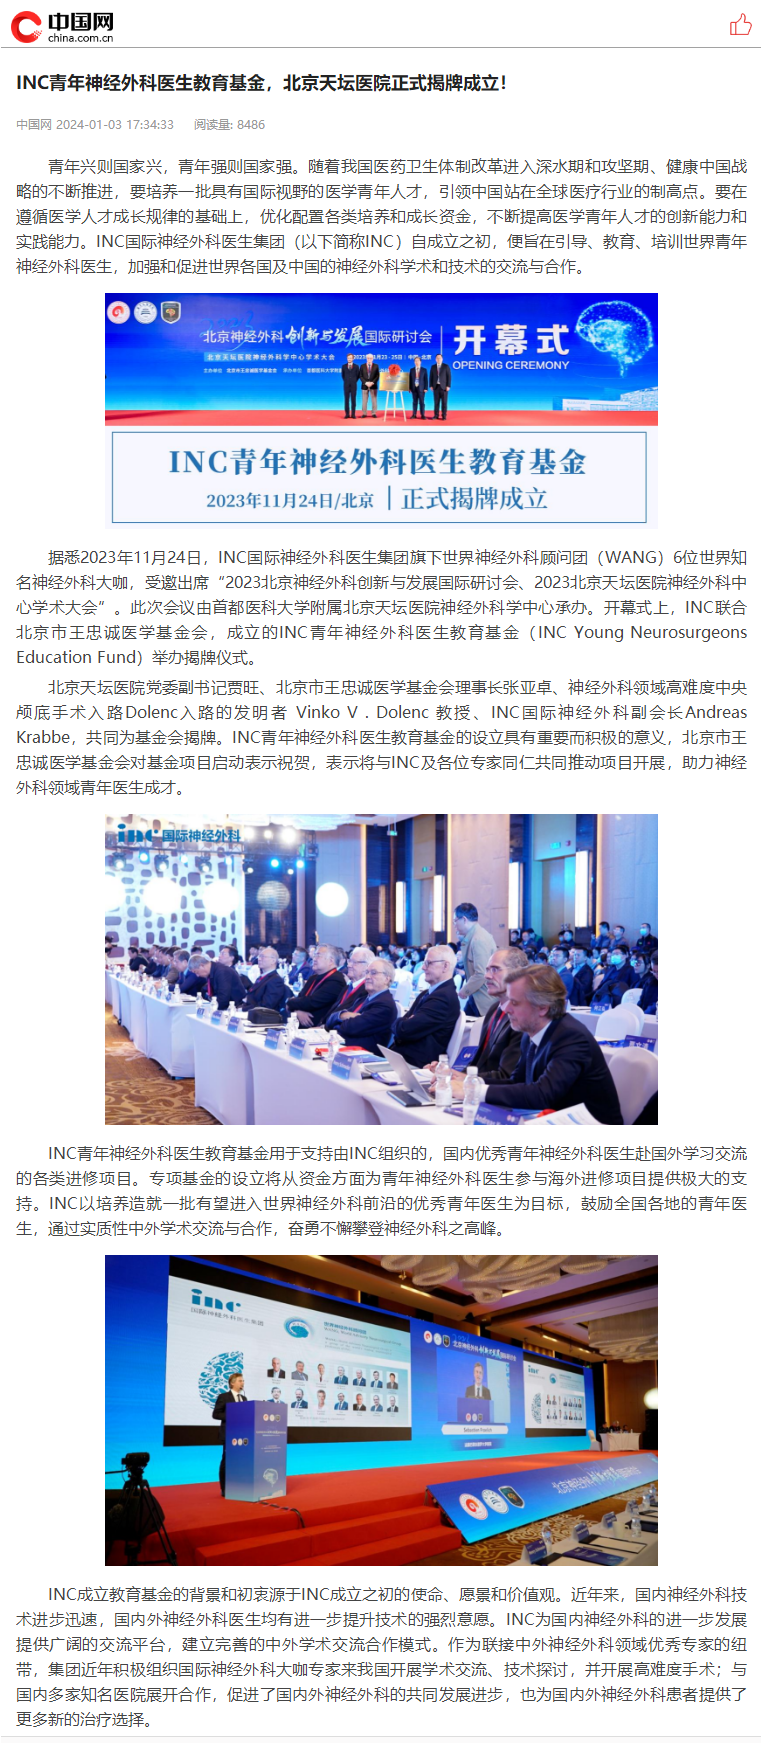 INC联合北京市王忠诚医学基金会，INC青年神经外科医生教育基金正式揭牌成立。对此新华社新华财经、中国网等官方媒体做出重磅报道。